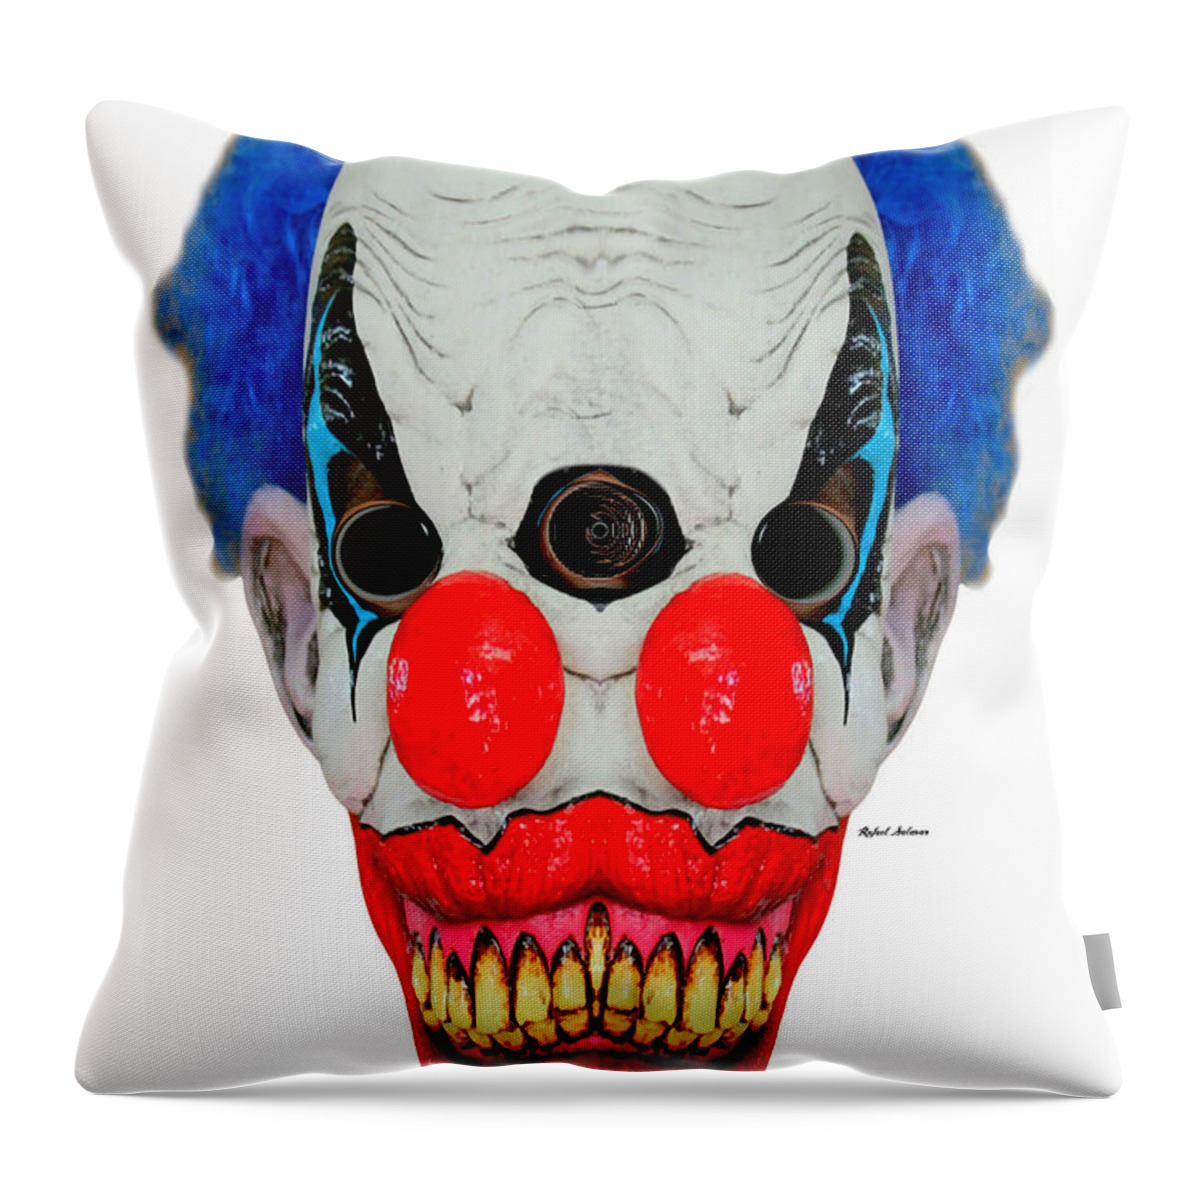 Rafael Salazar Throw Pillow featuring the digital art Creepy Clown by Rafael Salazar